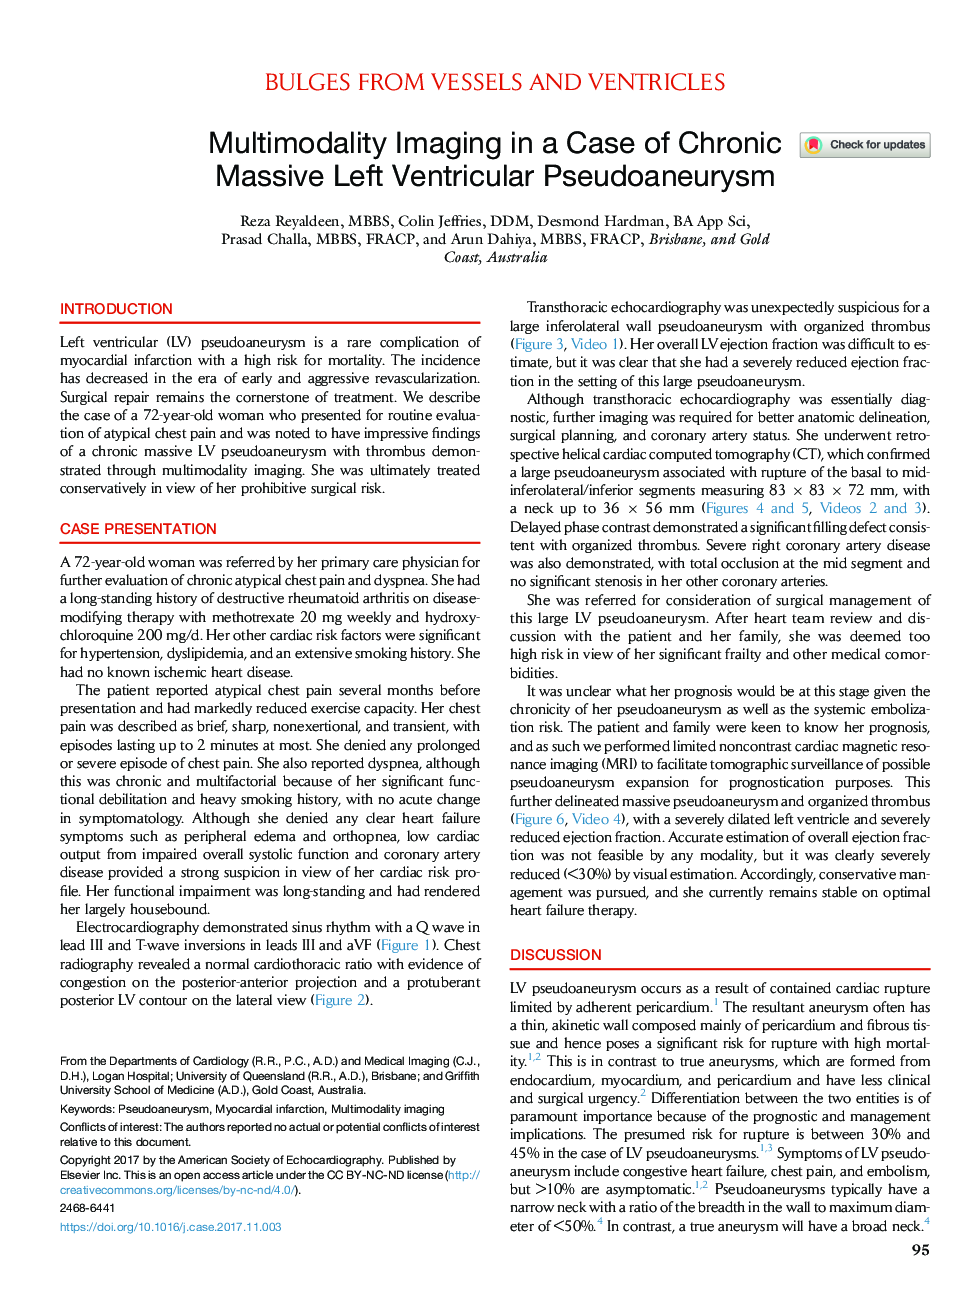 Multimodality Imaging in a Case of Chronic Massive Left Ventricular Pseudoaneurysm